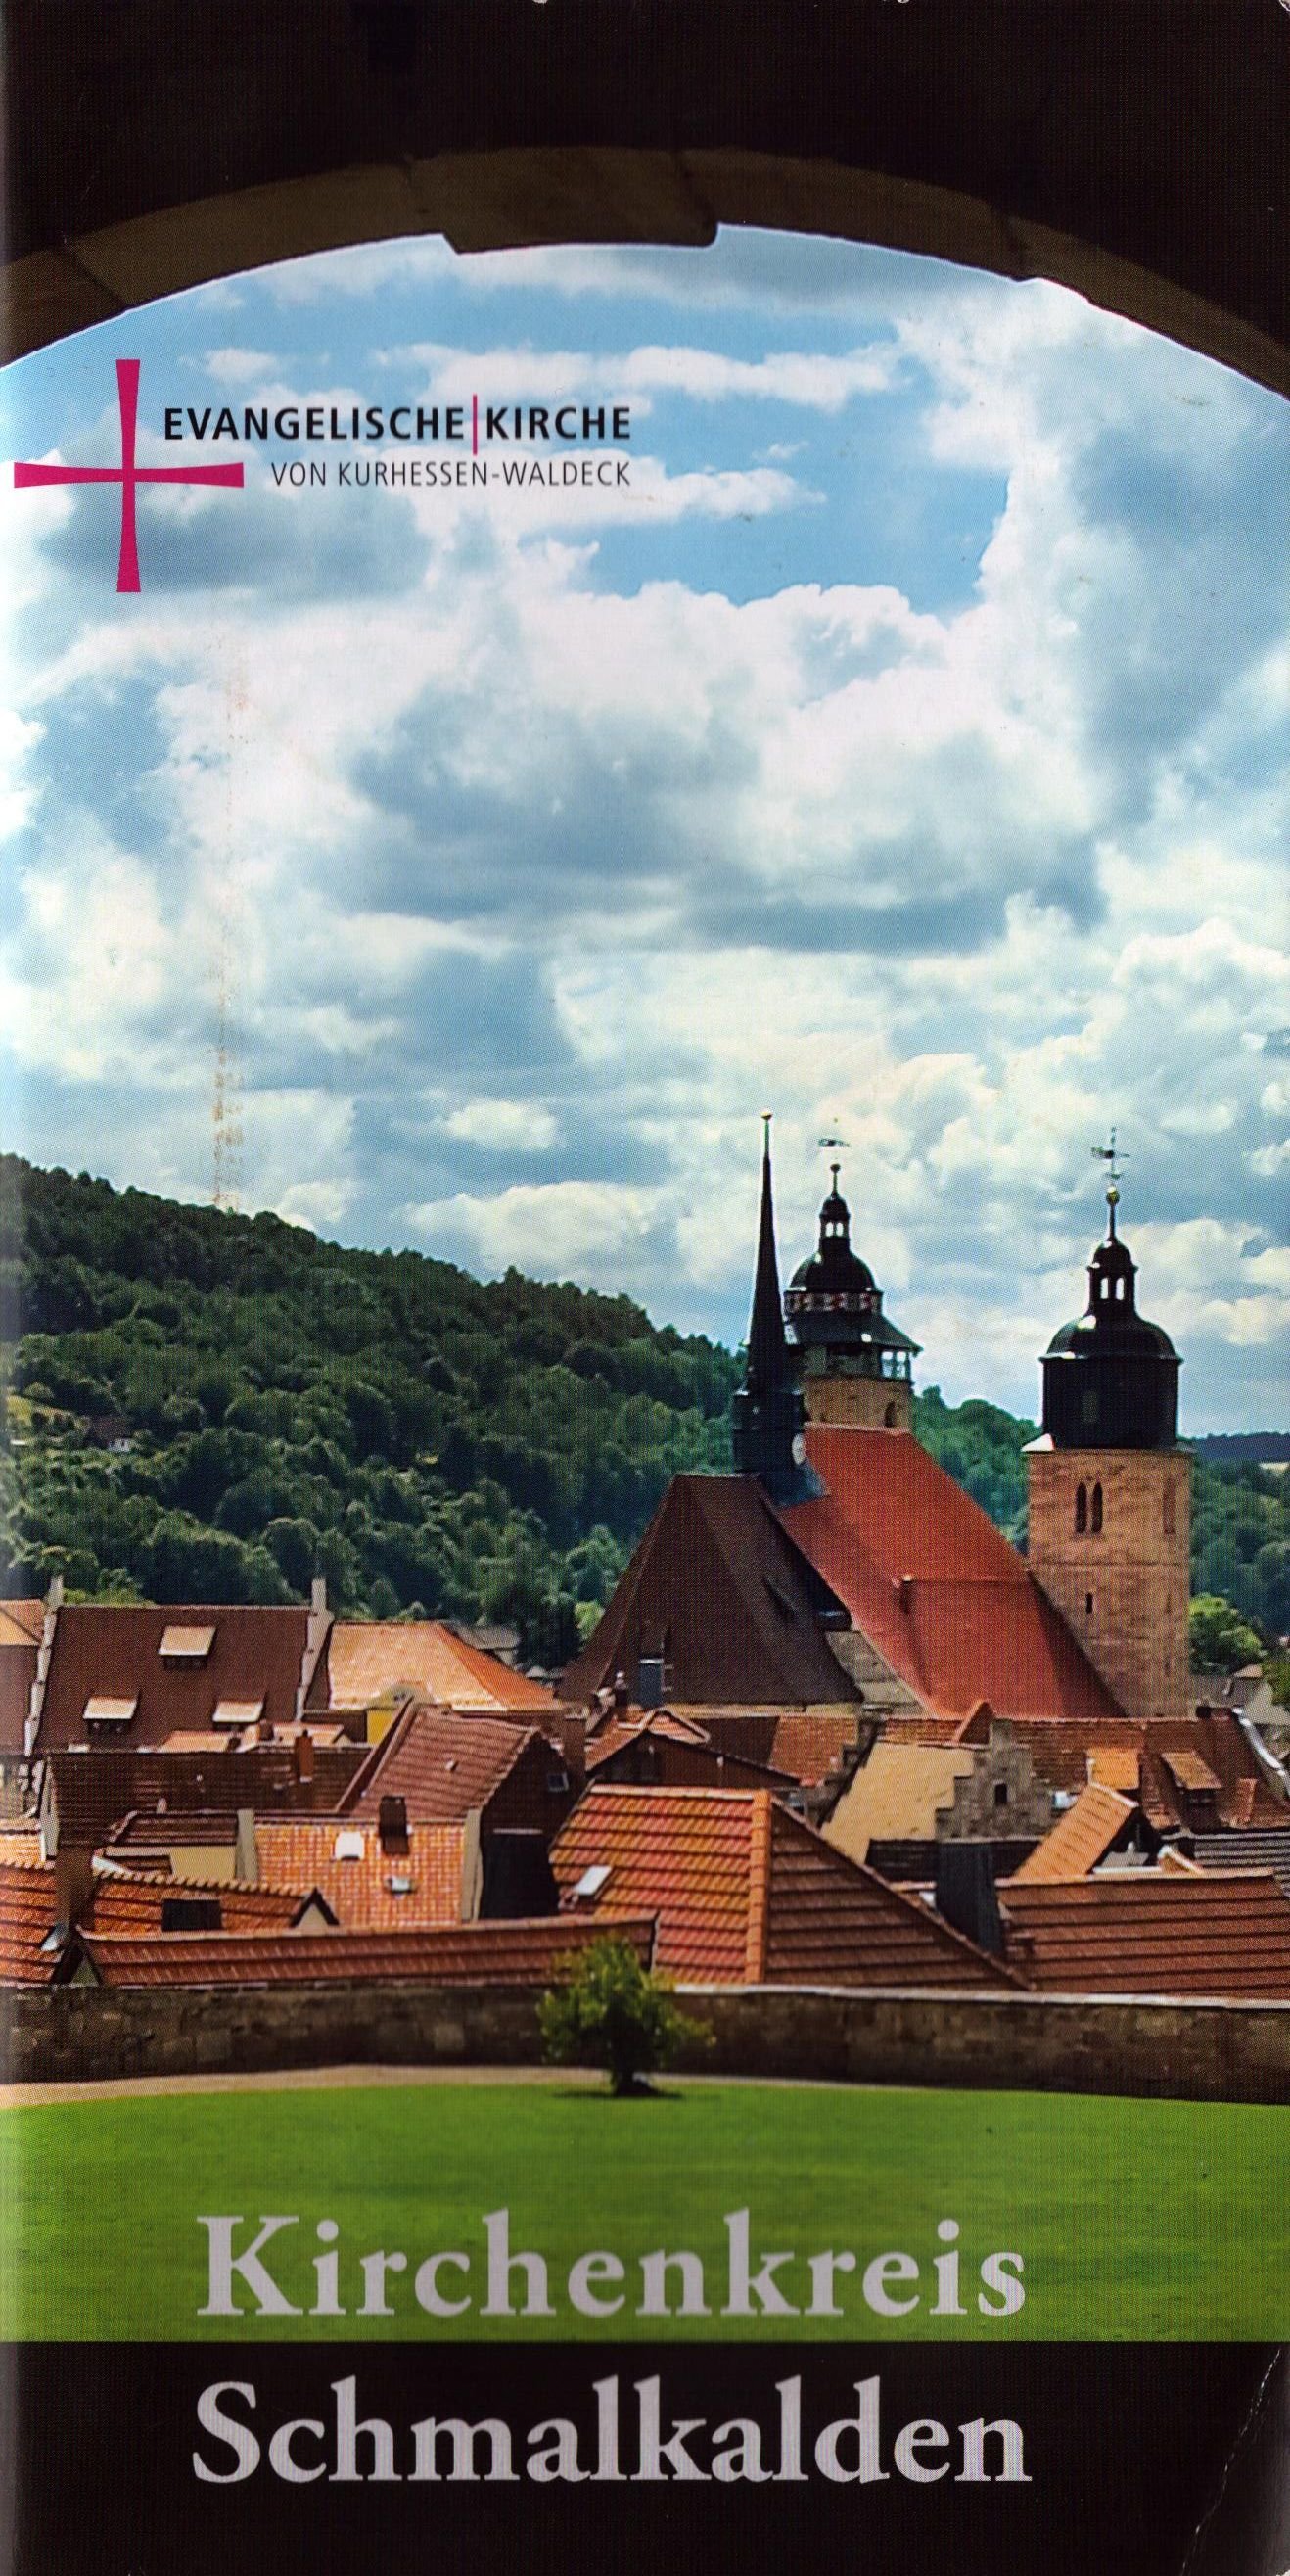 Kirchenkreis Schmalkalden (Archiv SAXONIA-FREIBERG-STIFTUNG CC BY-NC-SA)